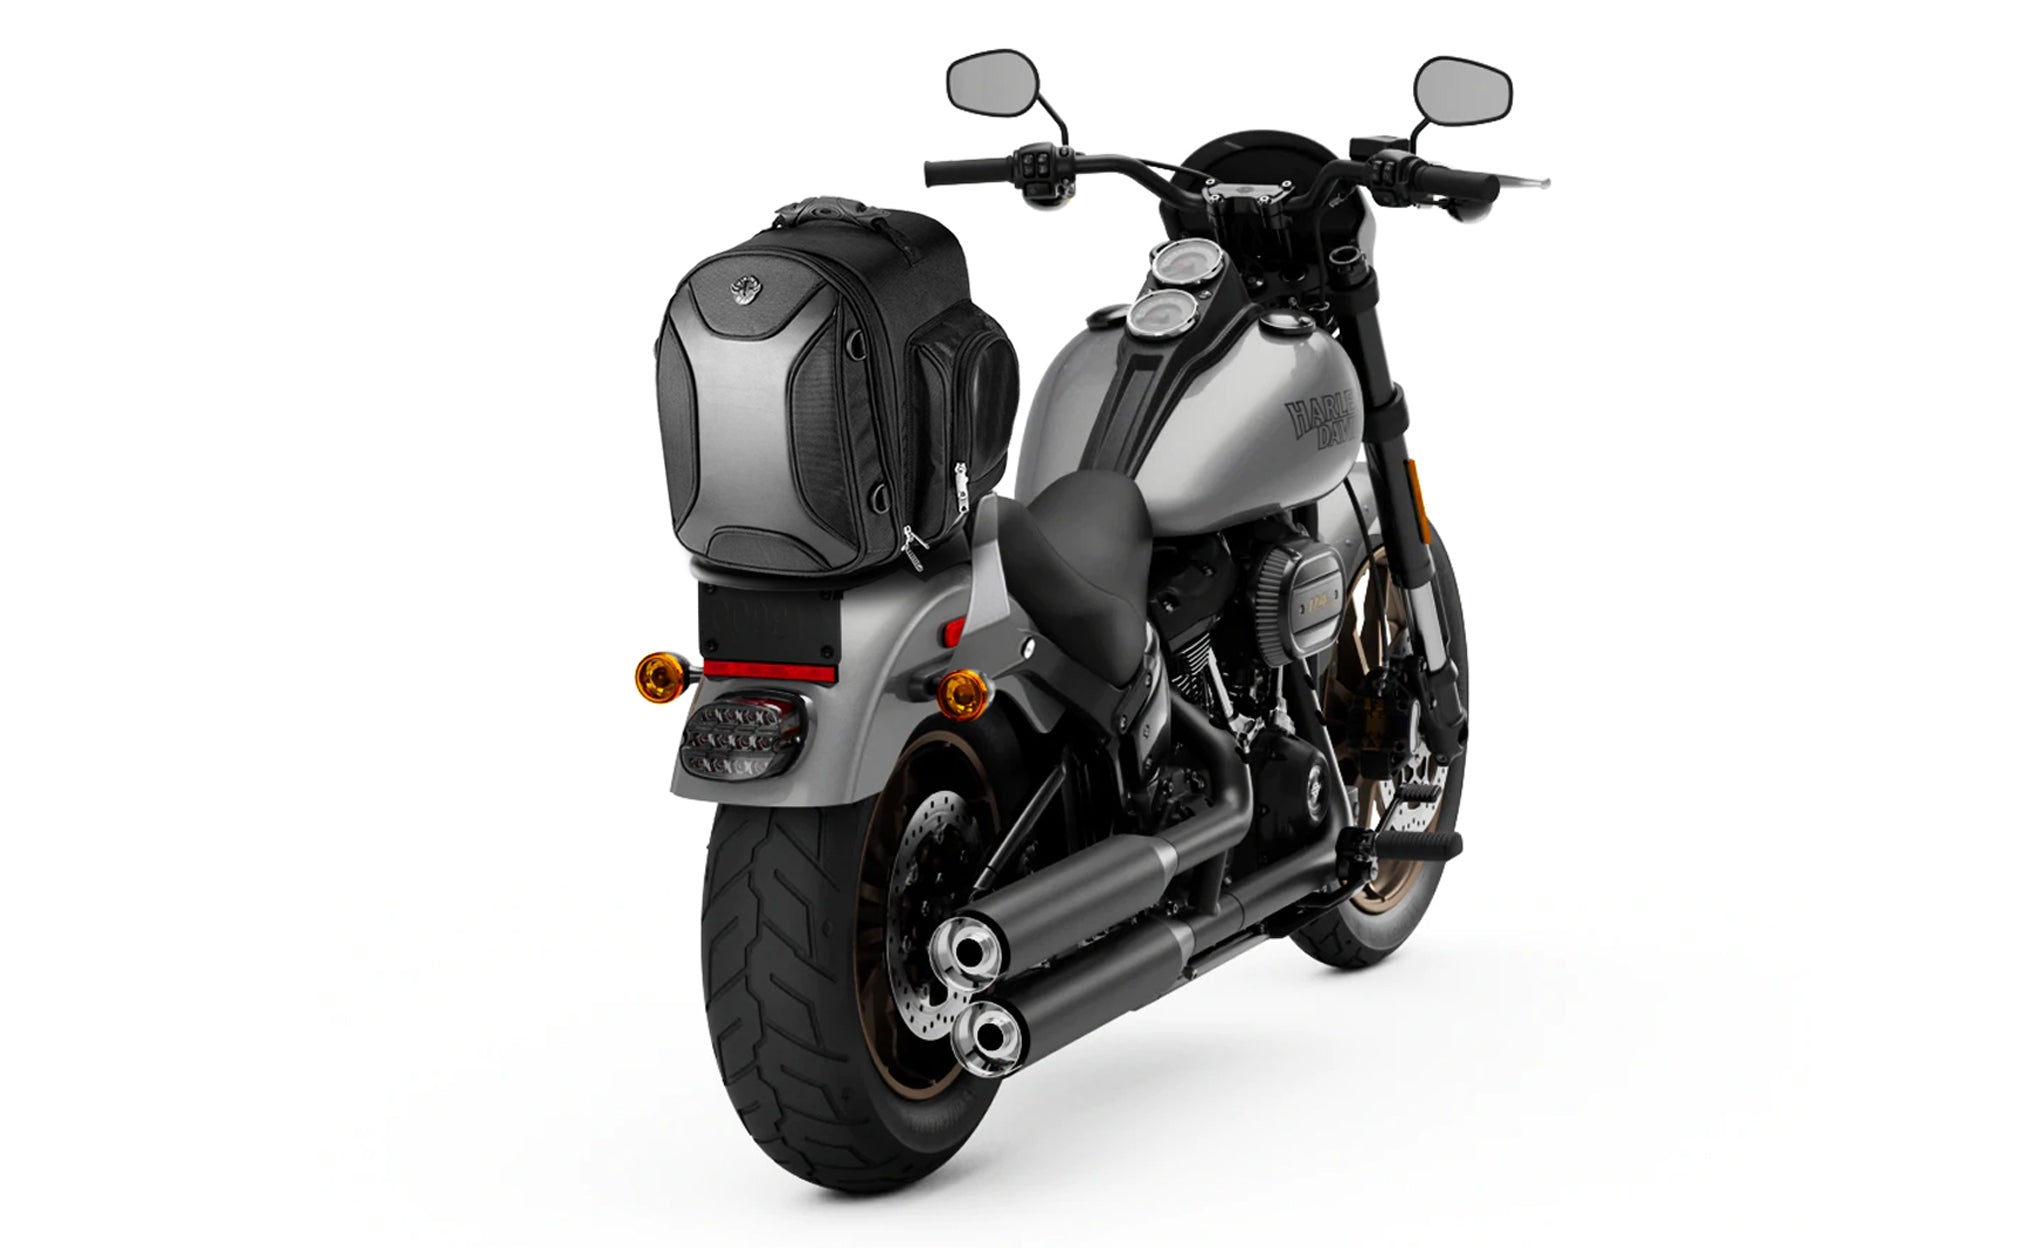 Viking Dagr Small Motorcycle Sissy Bar Bag Bag on Bike View @expand